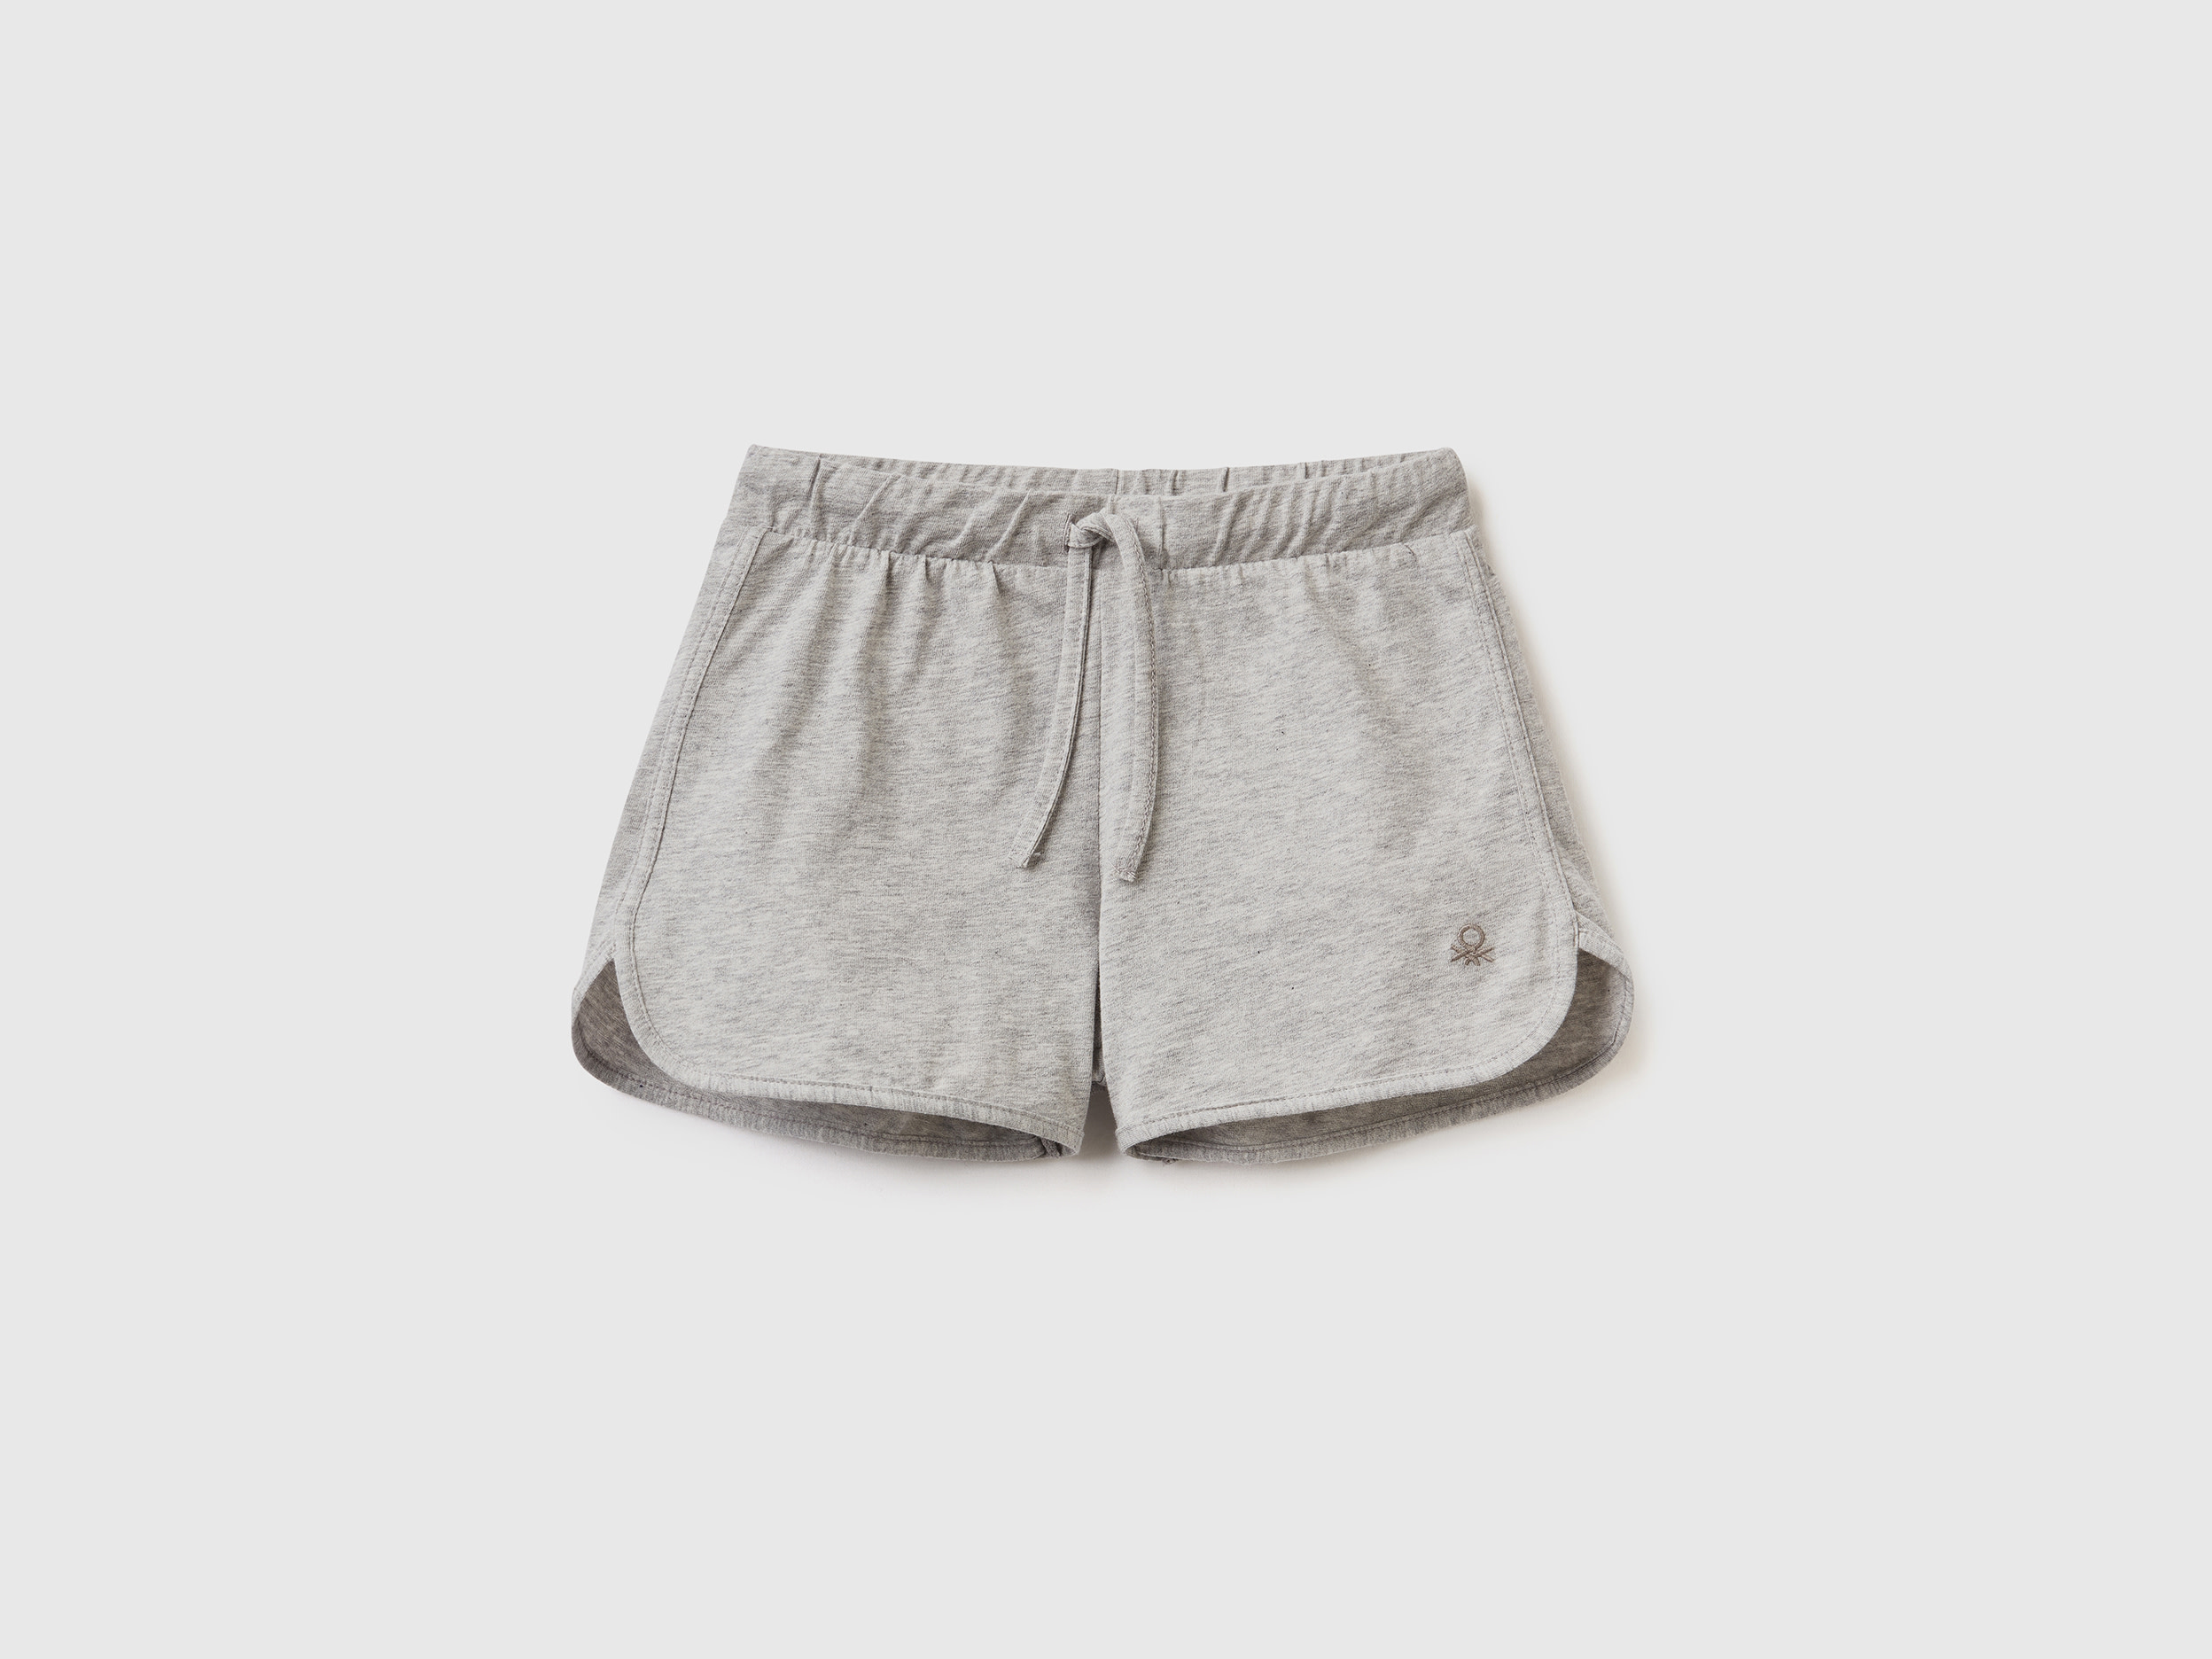 Image of Benetton, Runner Style Shorts In Organic Cotton, size 3XL, Light Gray, Kids